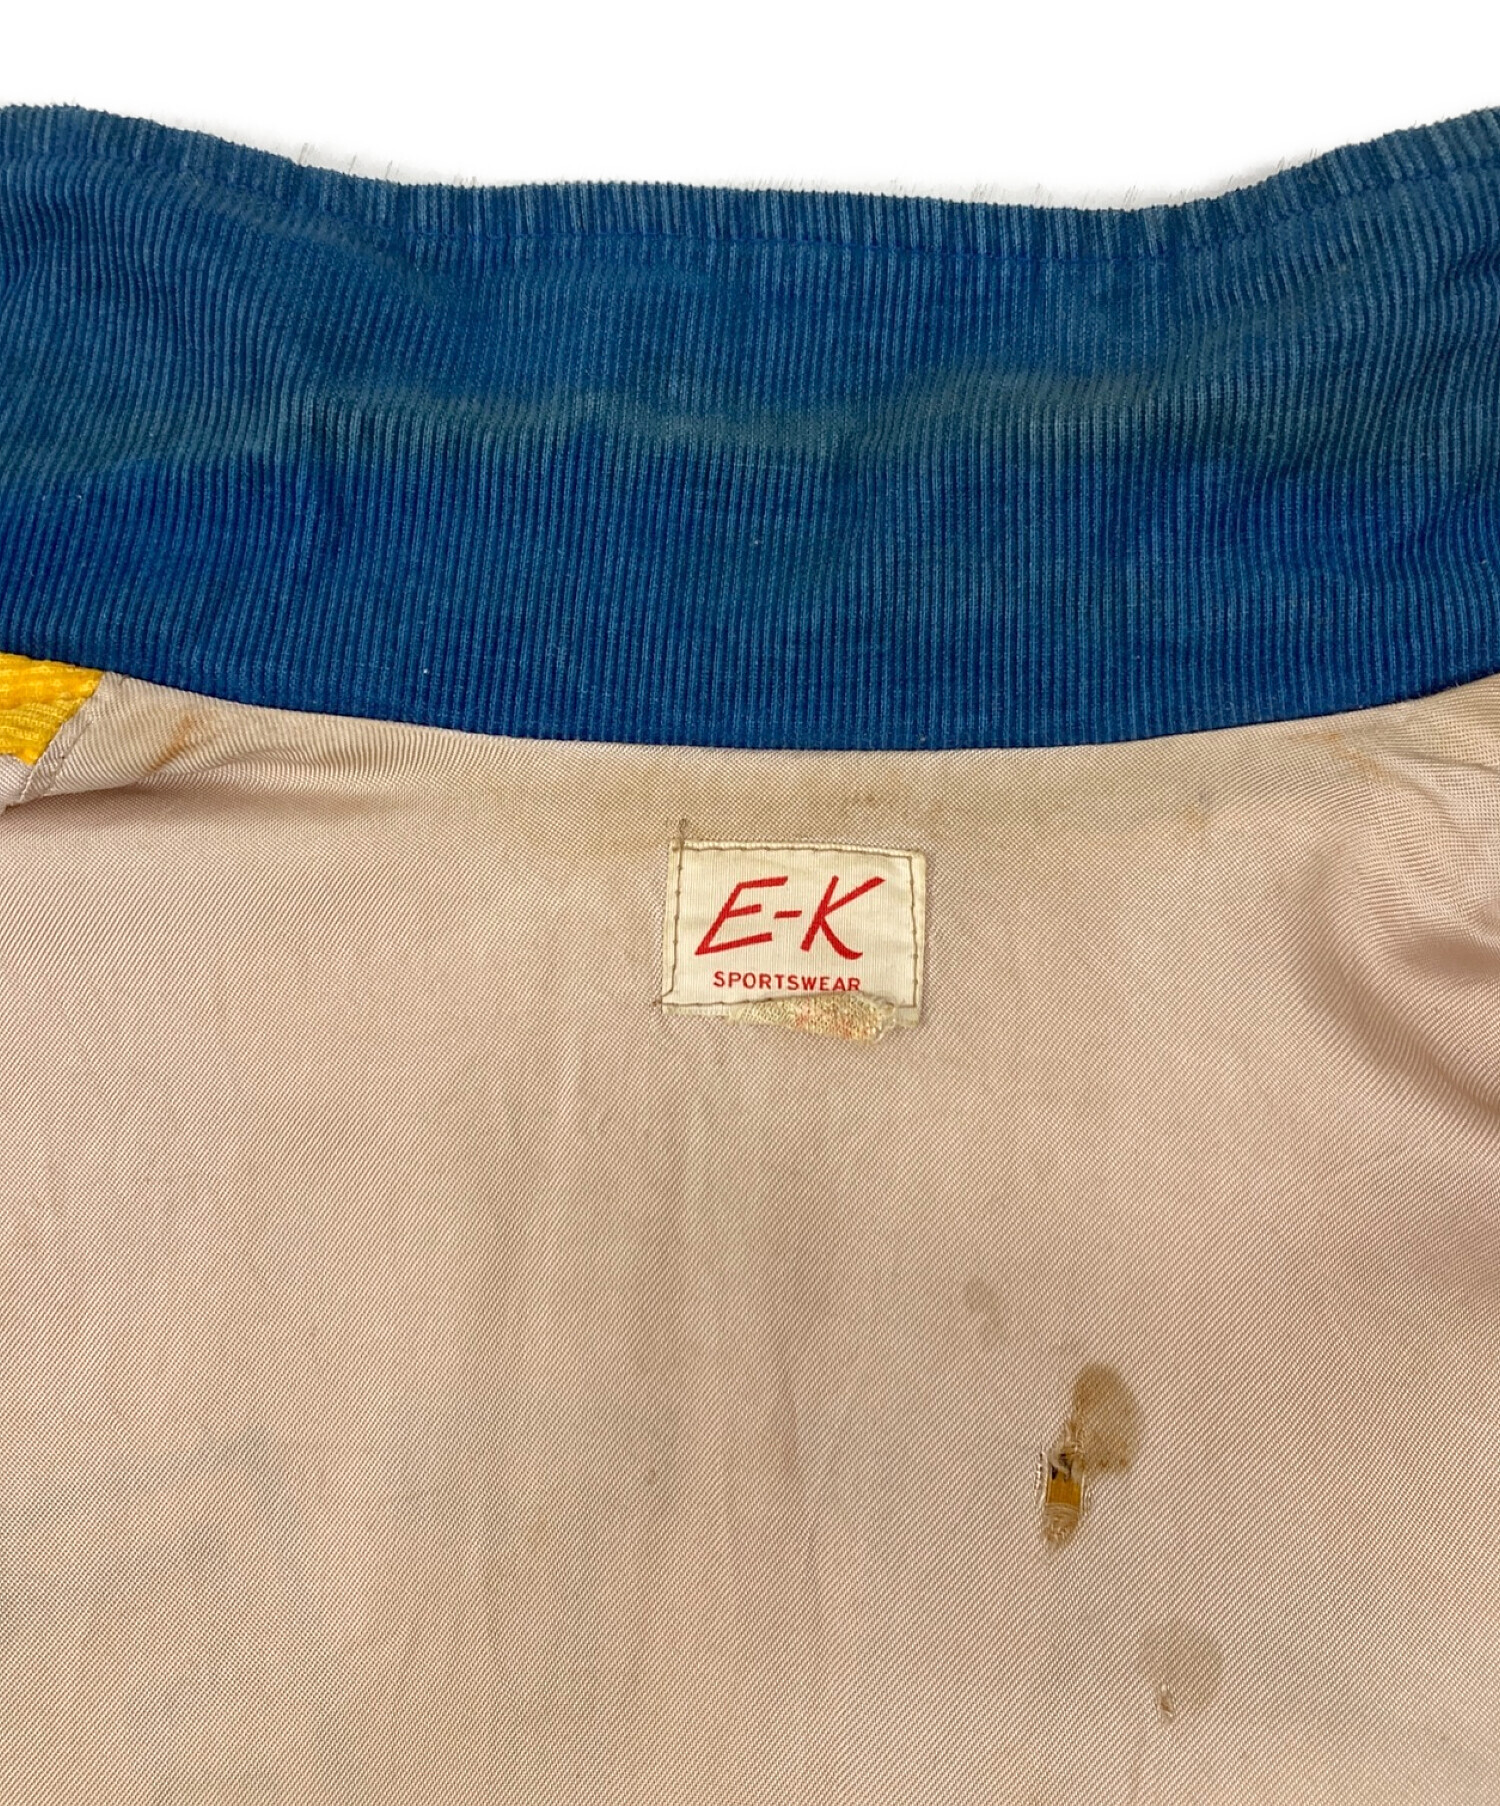 E-K SPORTSWEAR (イーケースポーツウェア) 50'sヴィンテージコーデュロイジャケット イエロー サイズ:不明